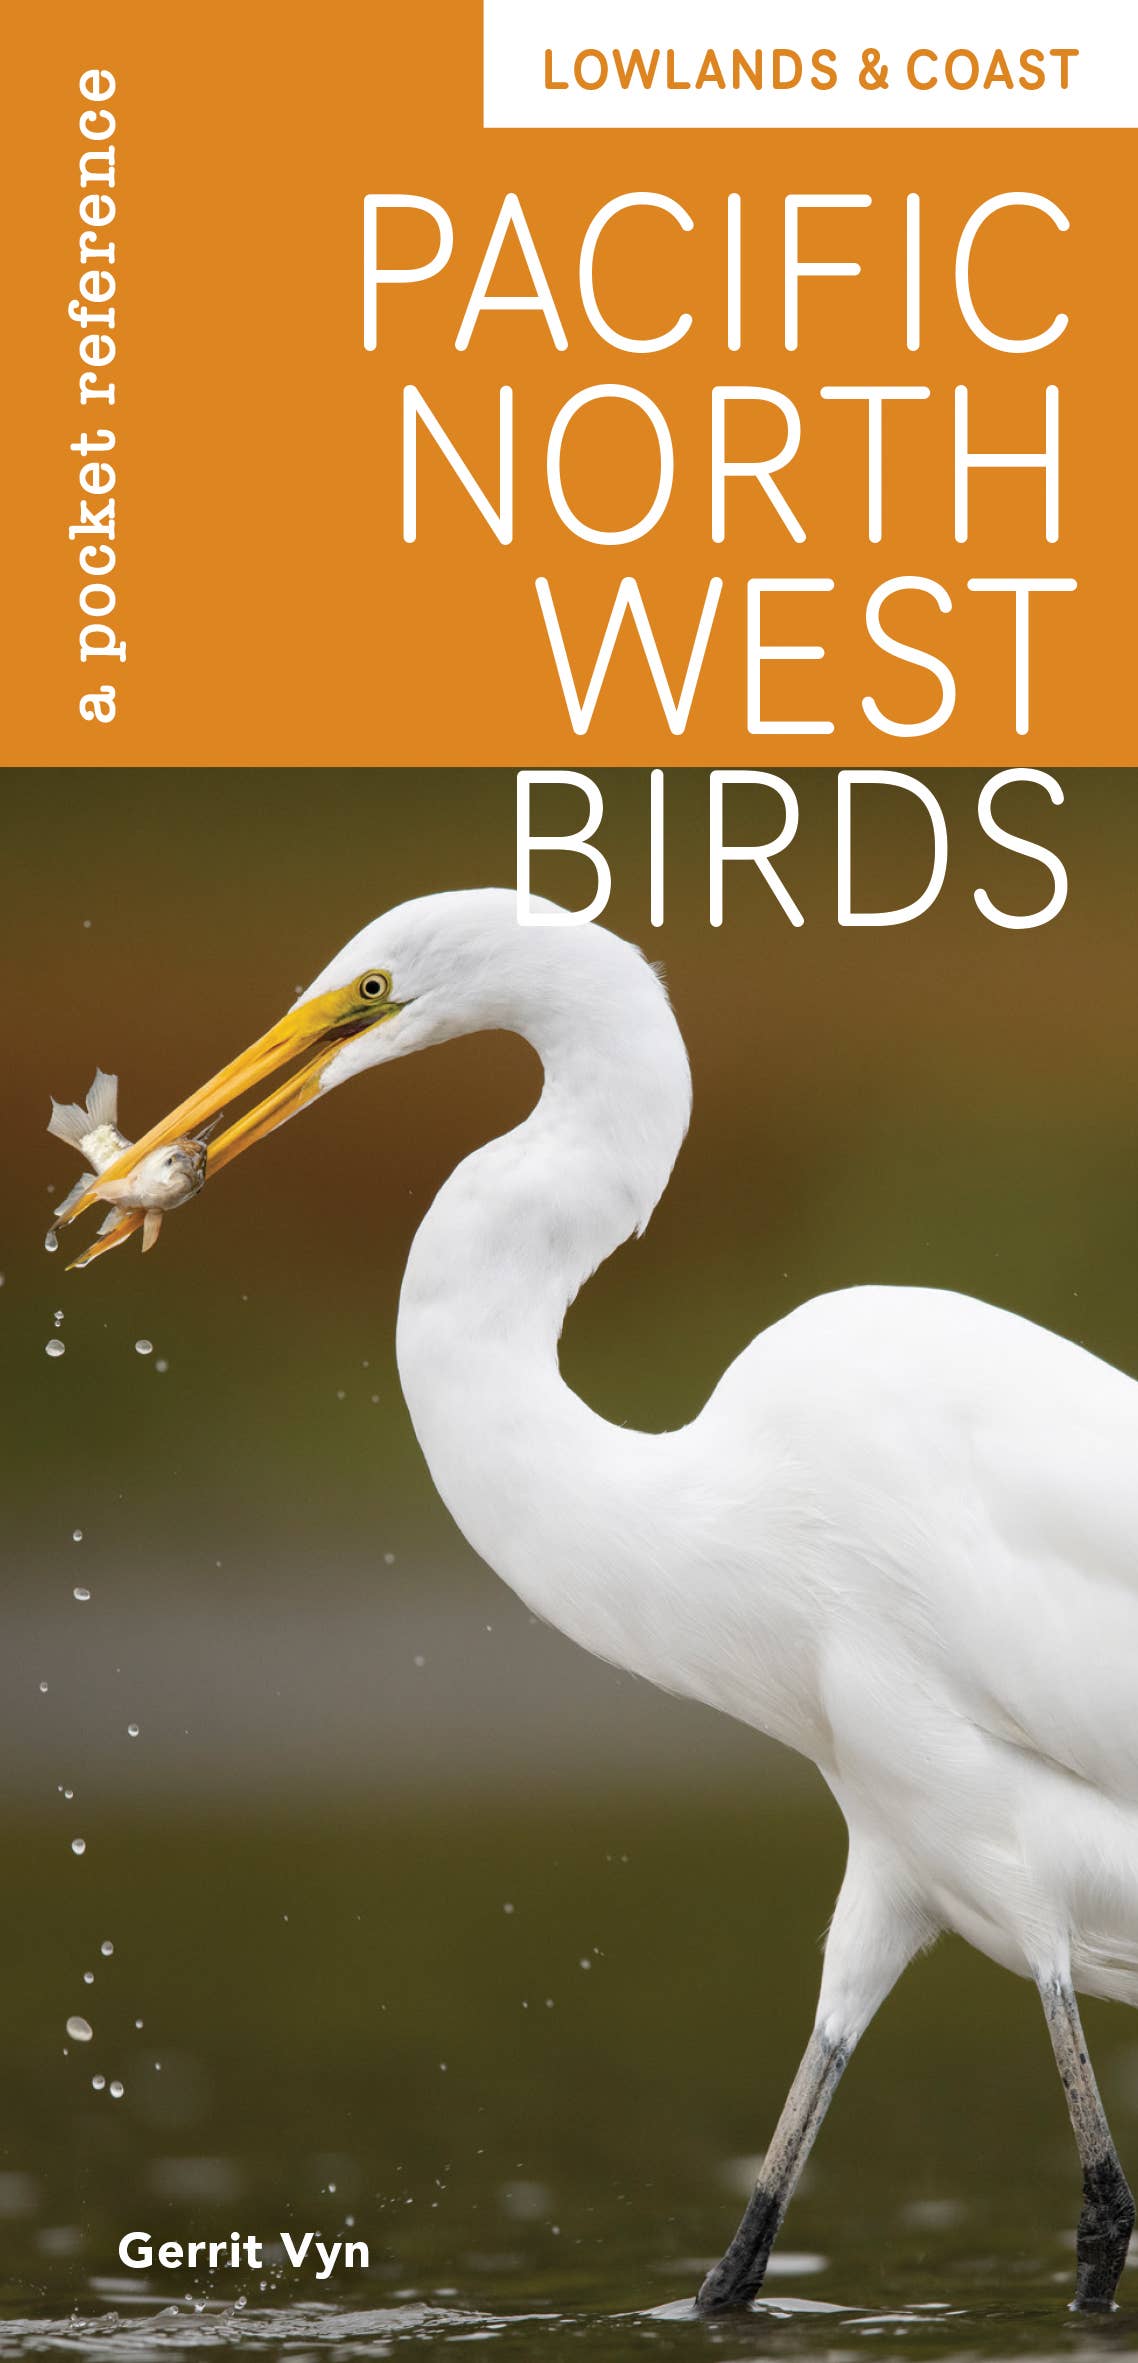 Pacific Northwest Birds: Lowlands & Coast